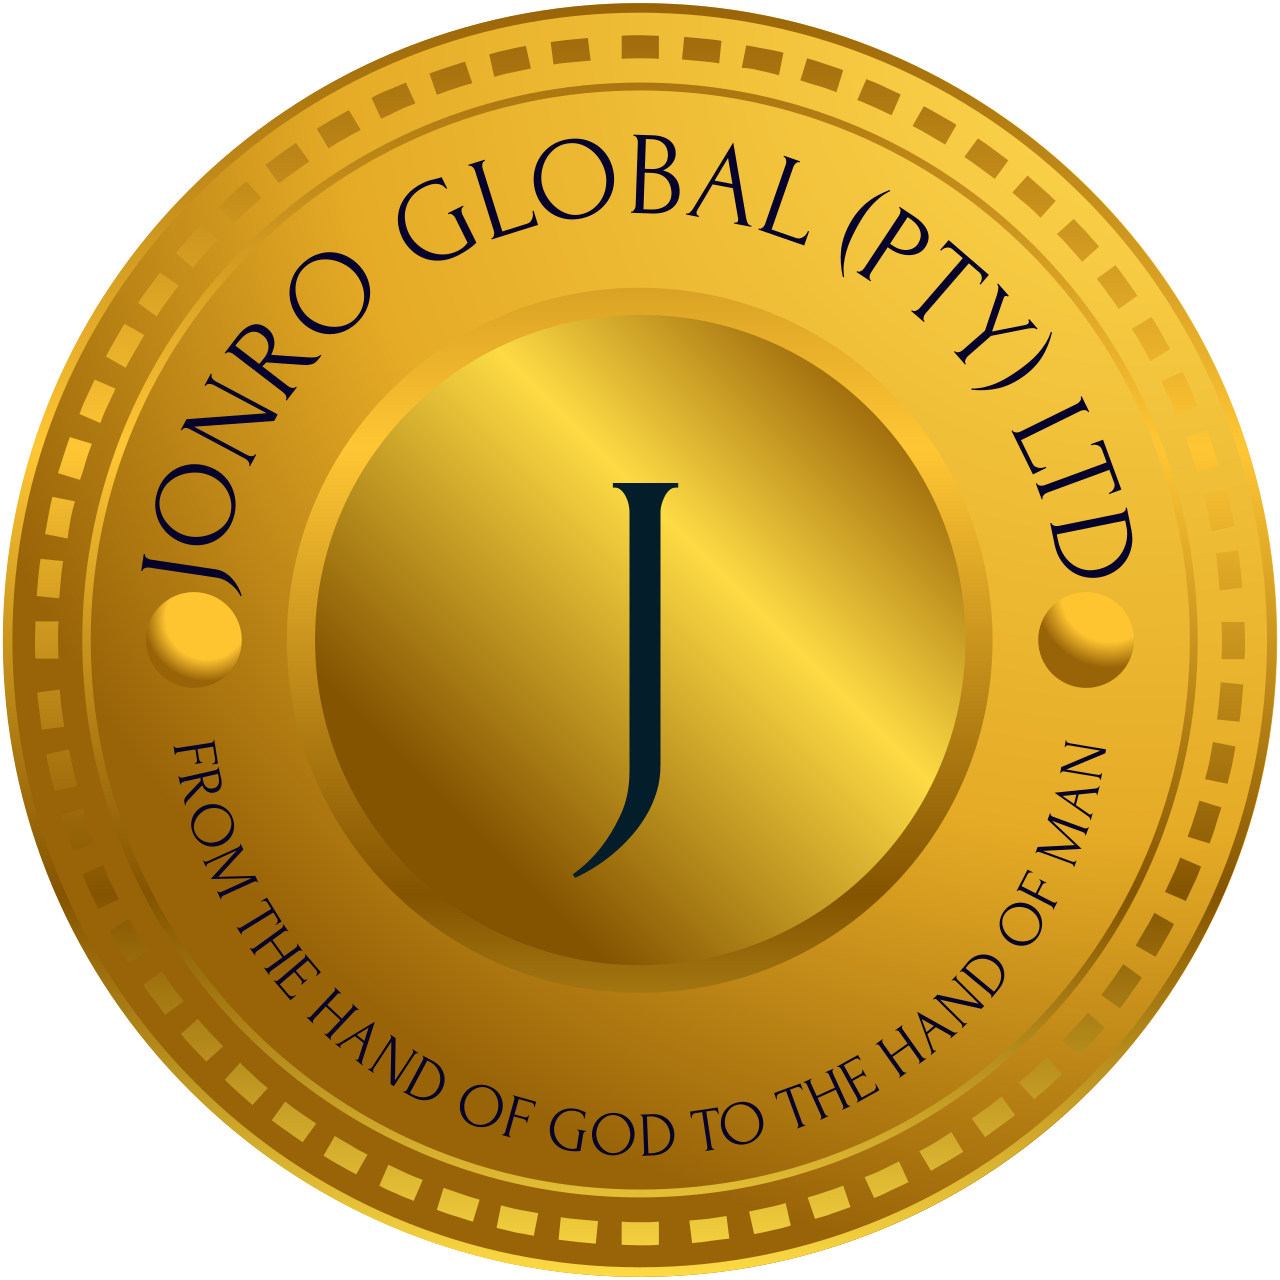 JONRO GLOBAL (PTY) LTD's web page